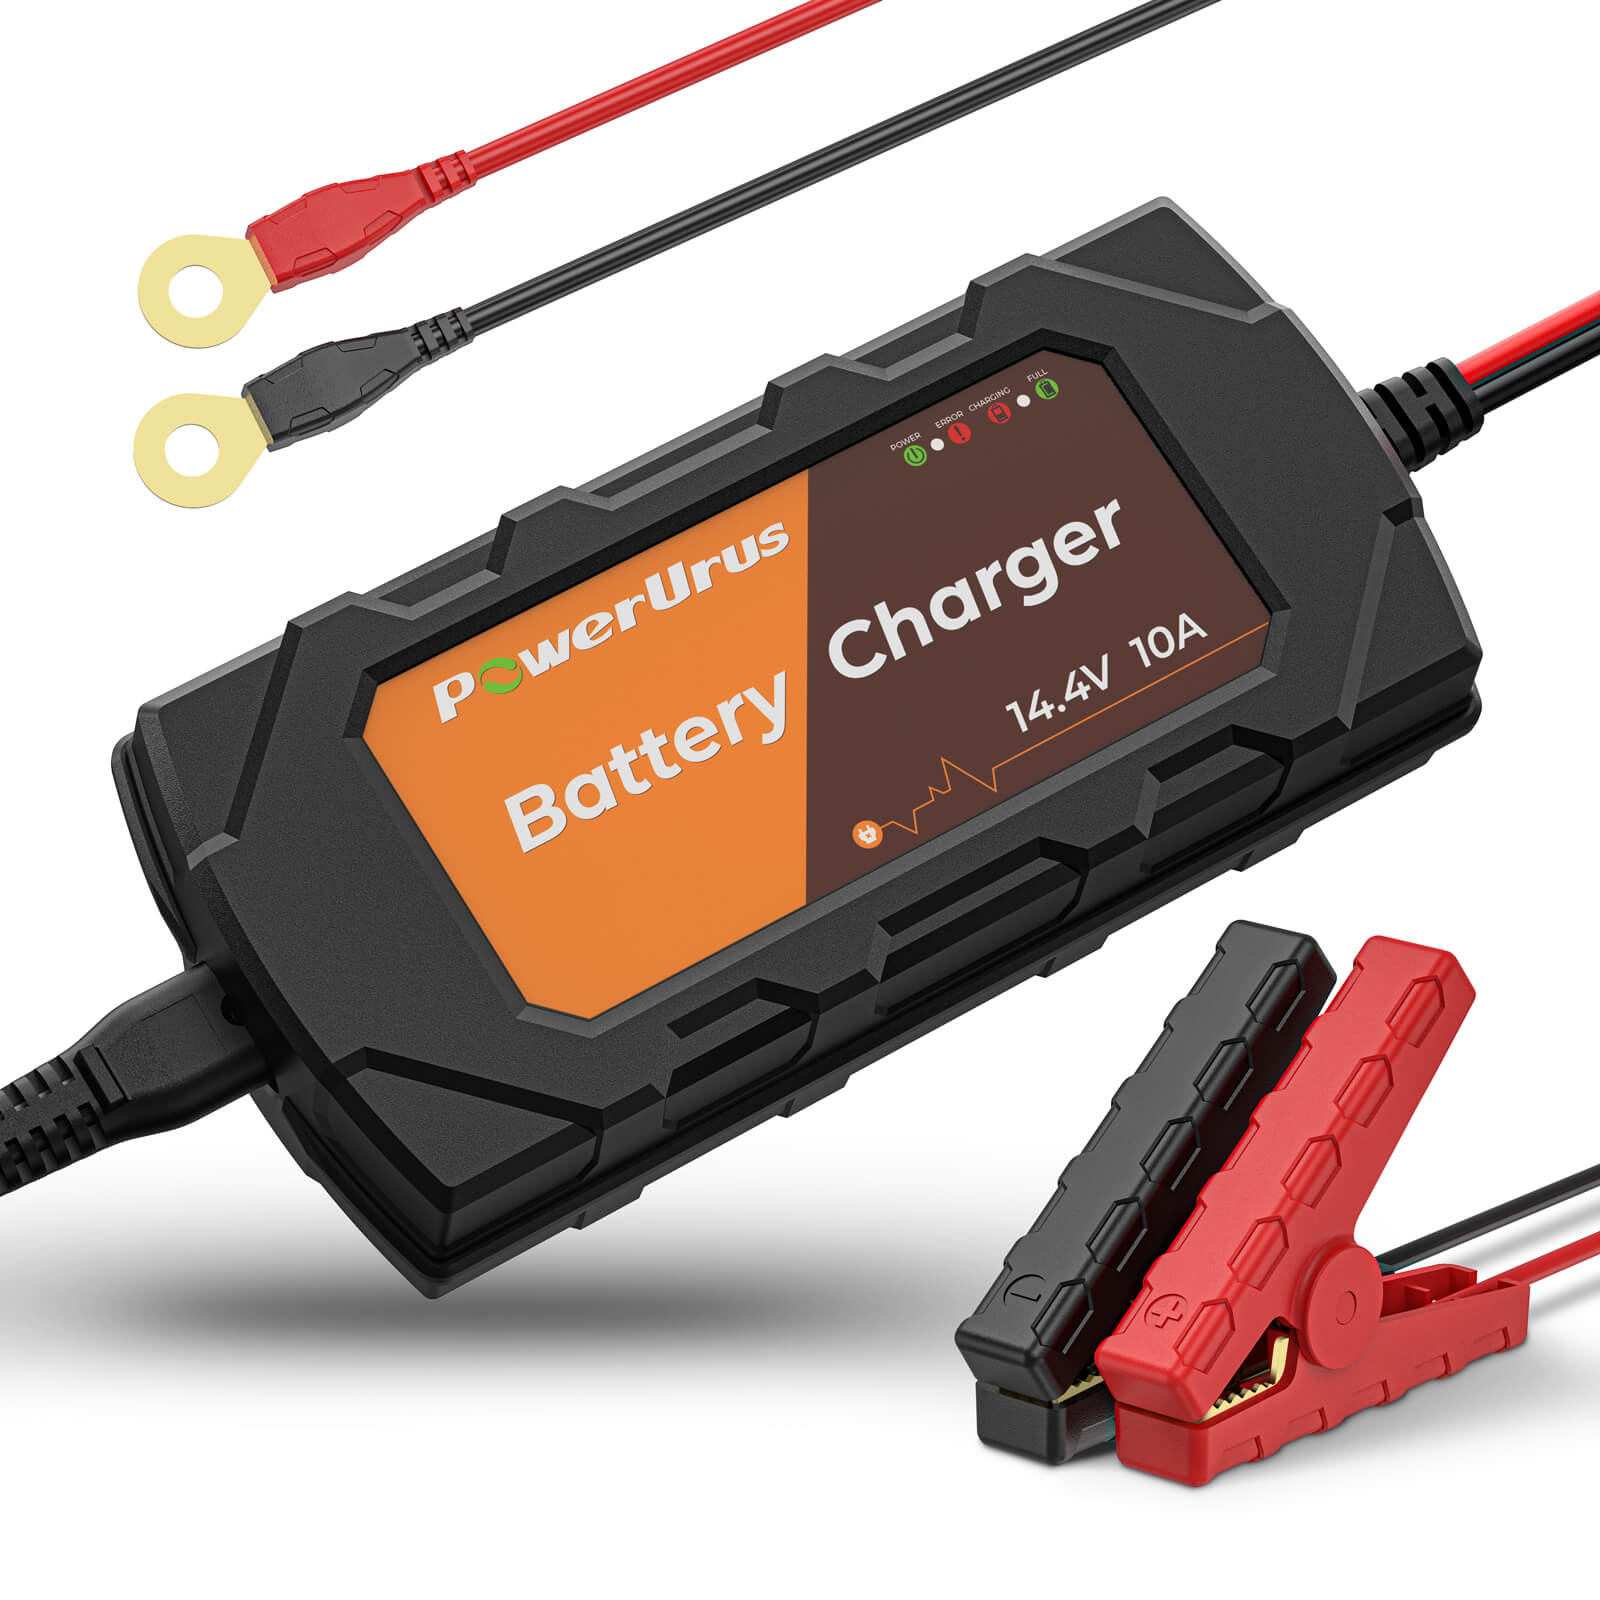 PowerUrus 14.4V-10A LiFePO4 battery charger – PowerUrus LiFePO4